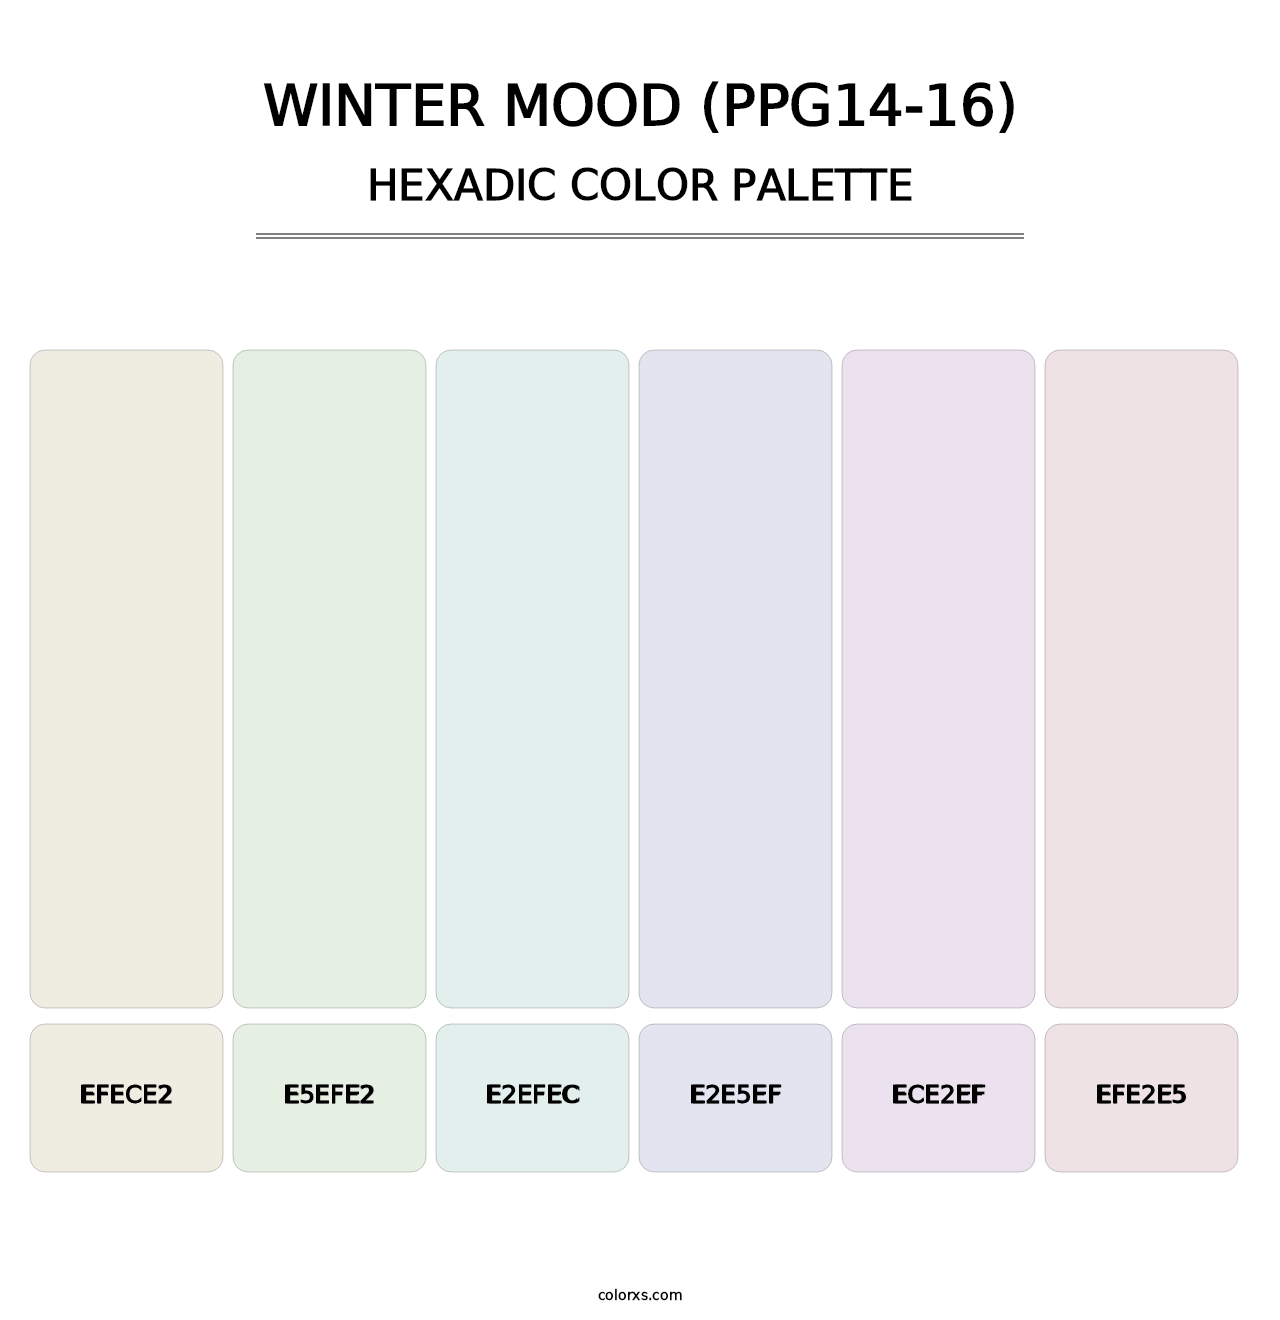 Winter Mood (PPG14-16) - Hexadic Color Palette